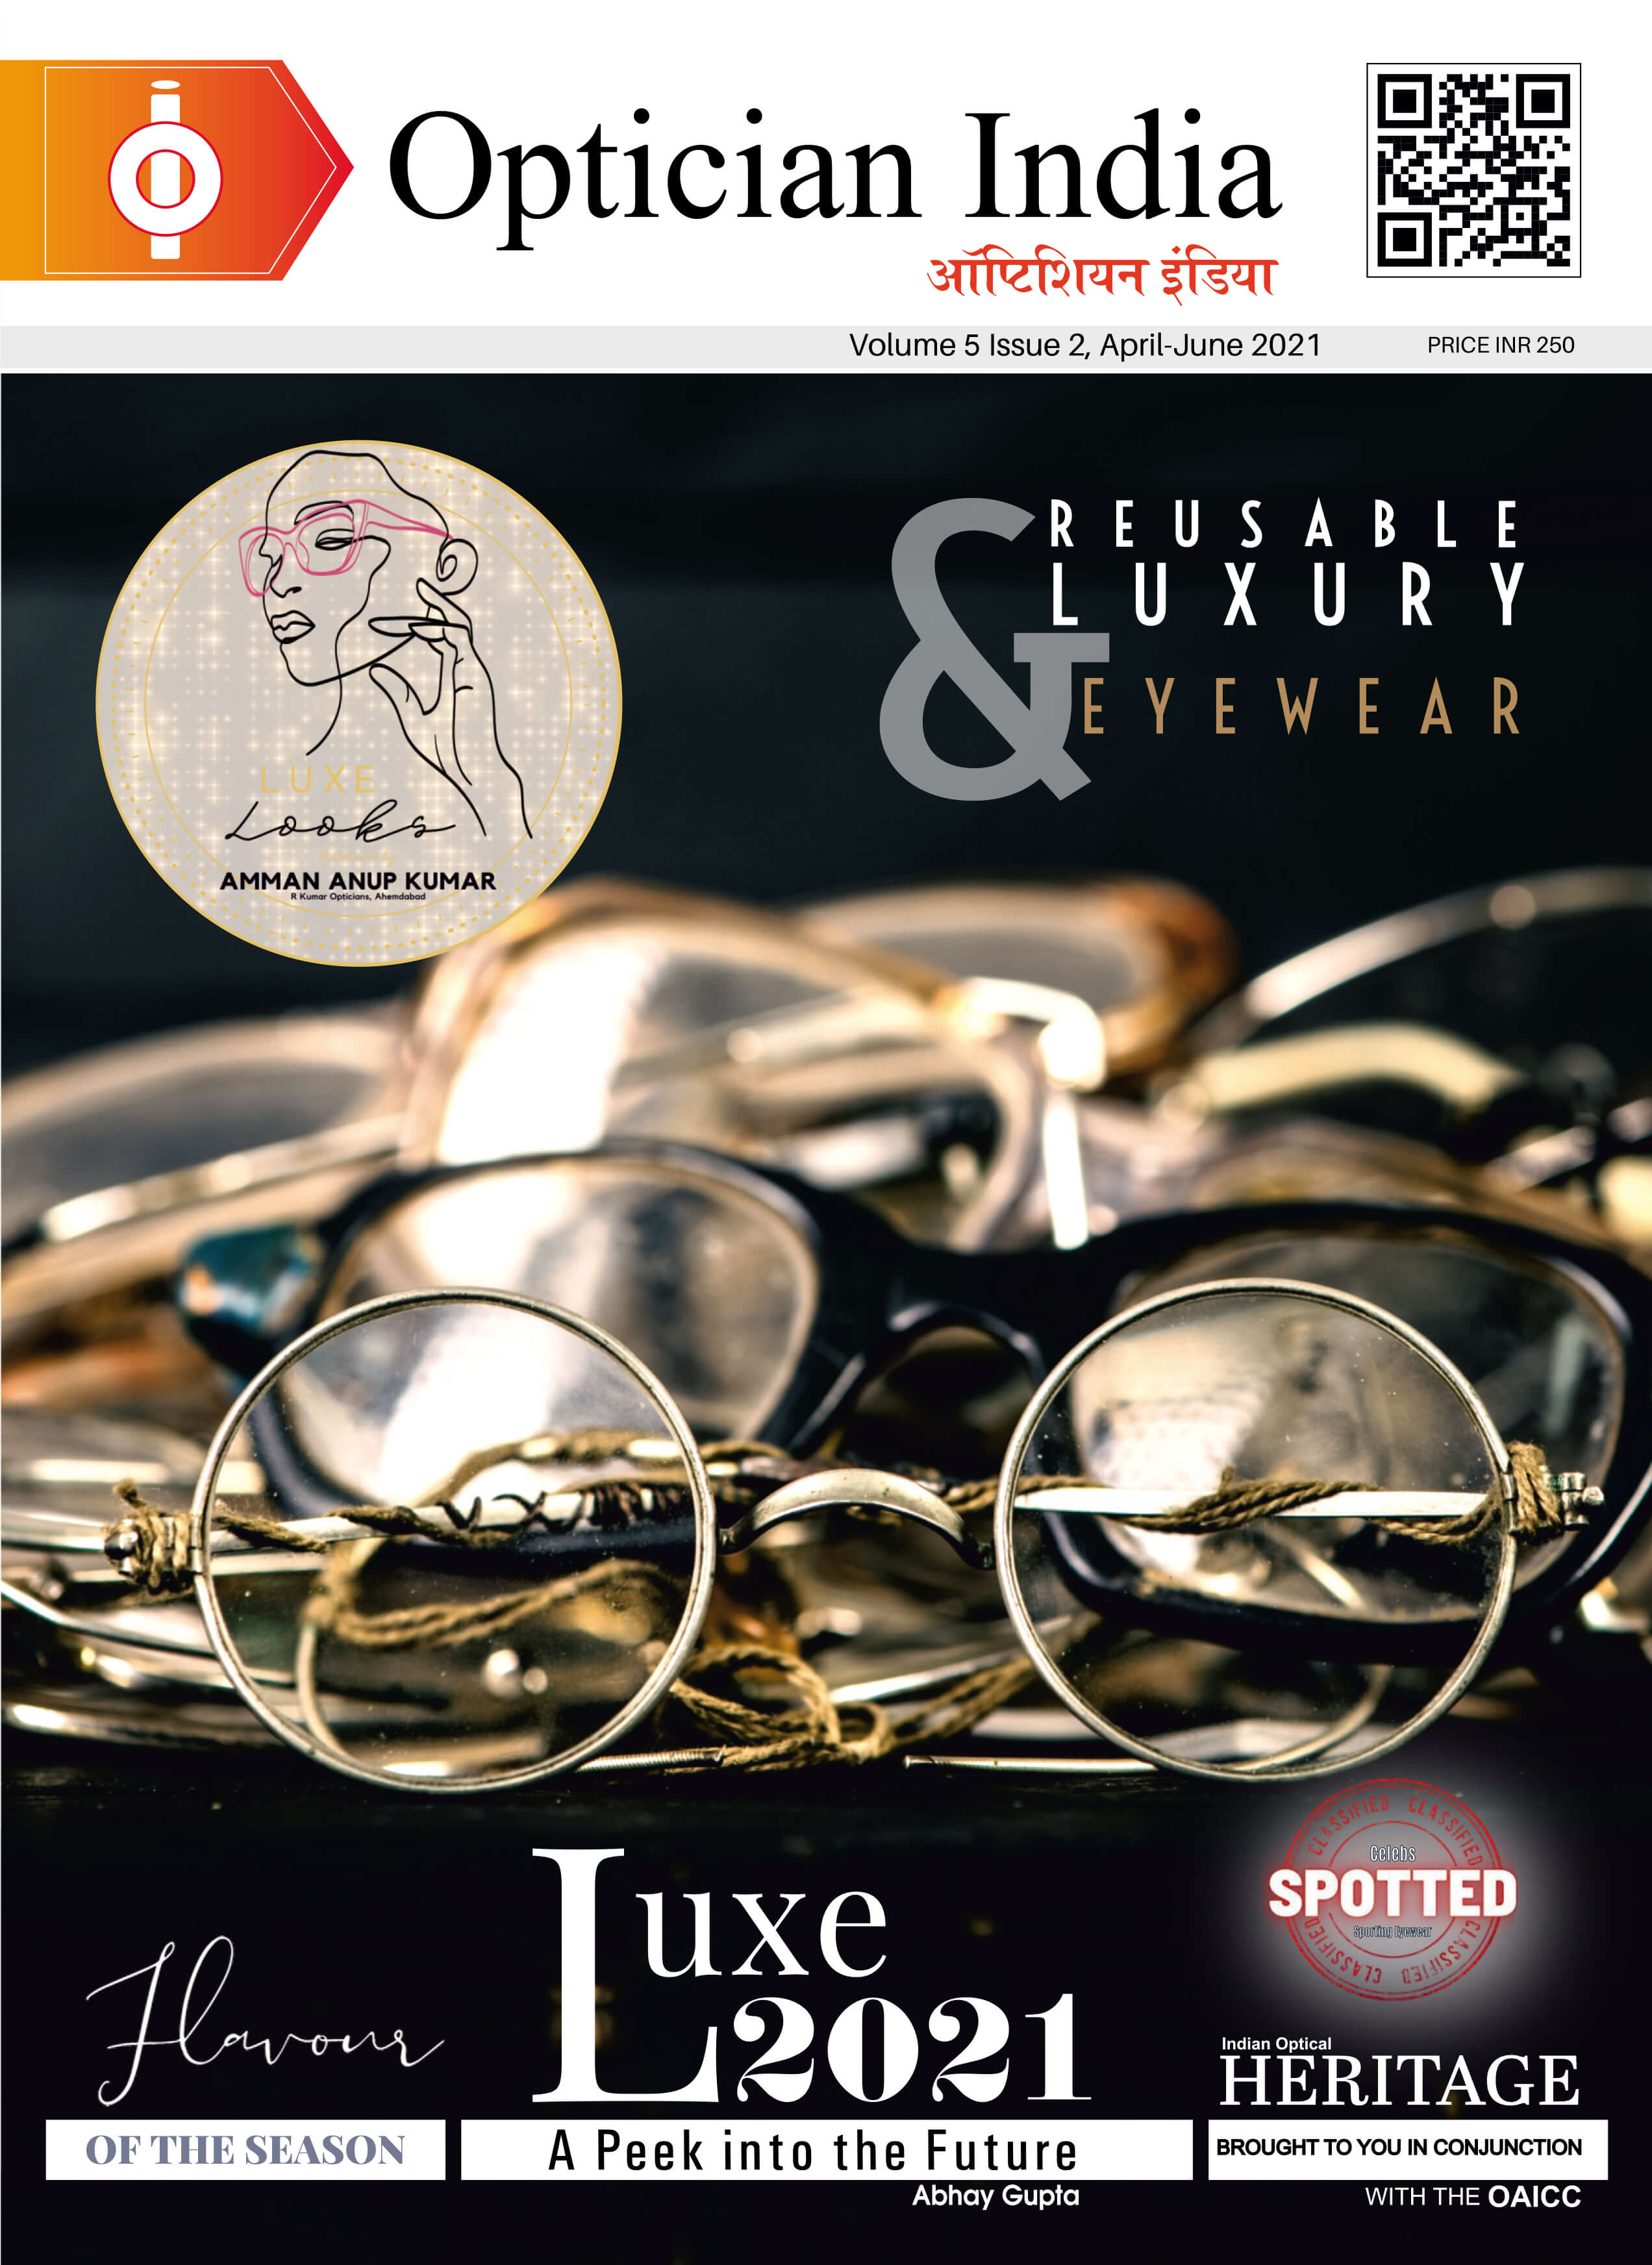 164095686_Optician India - Luxury Supplement Magazine_AGN-1.jpg